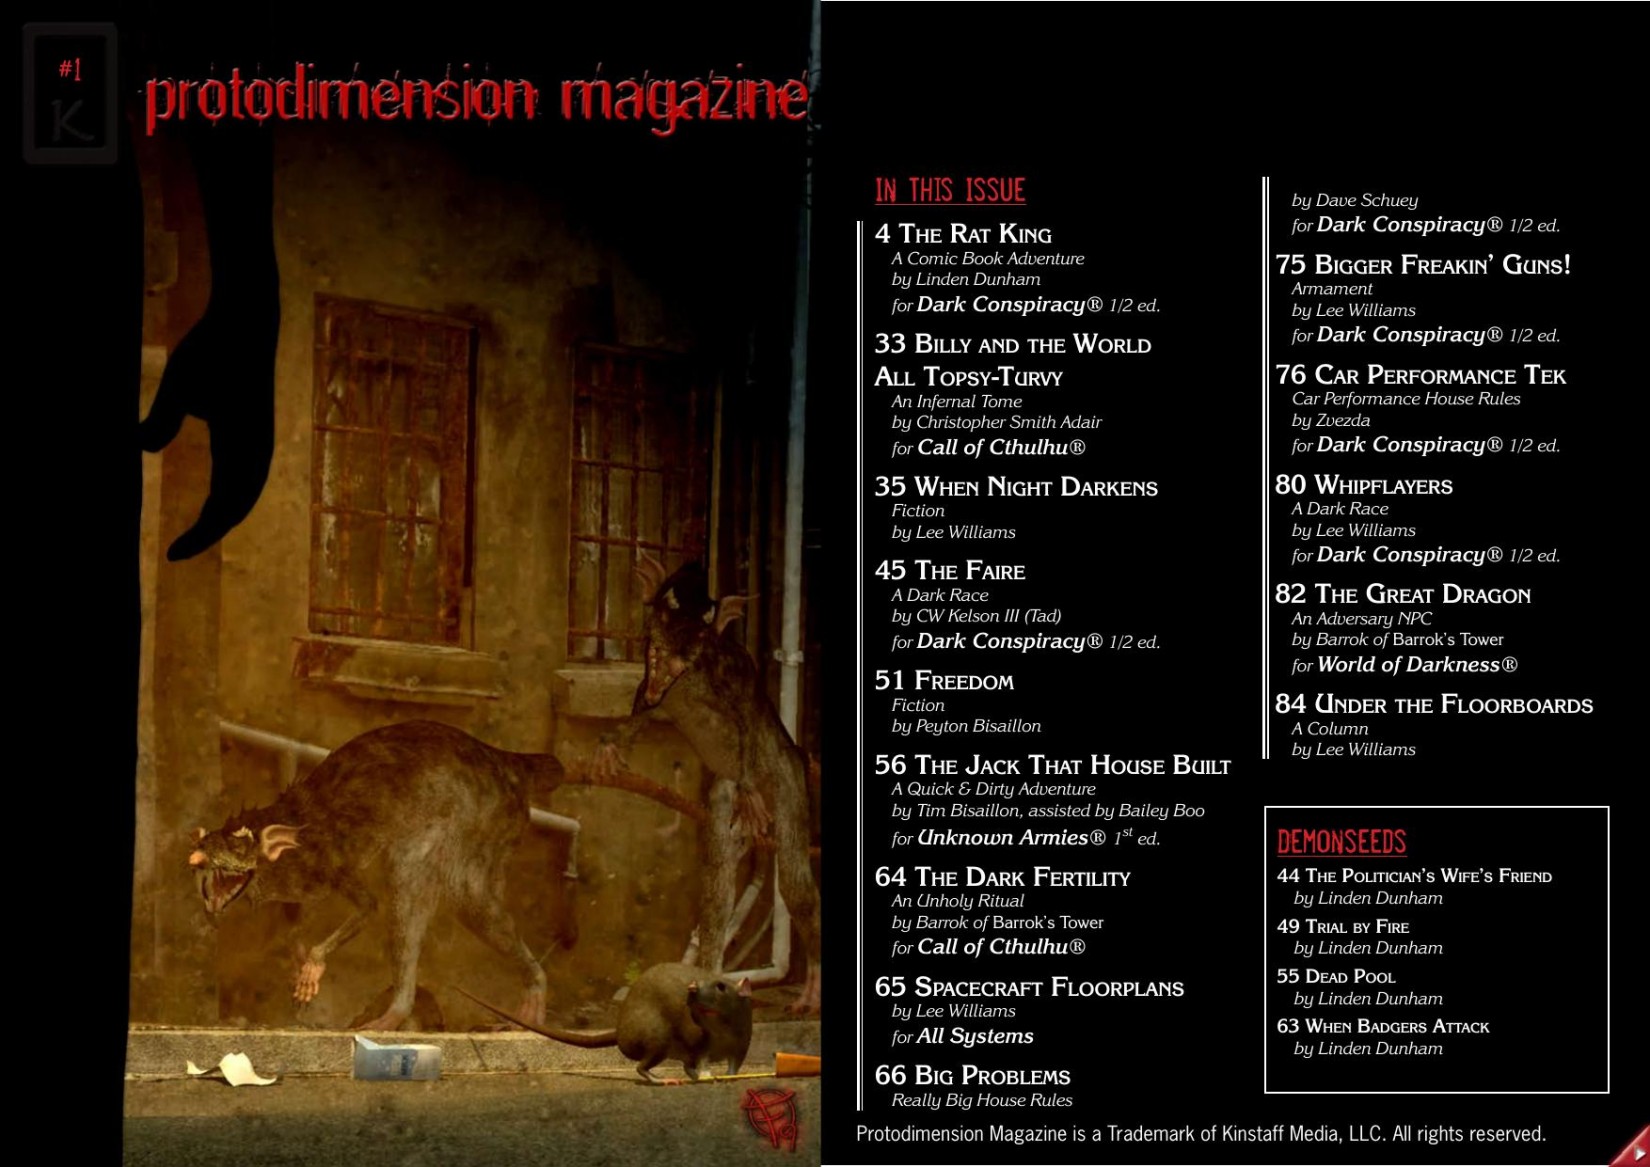 Protodimension Magazine #1 (Summer 2009)